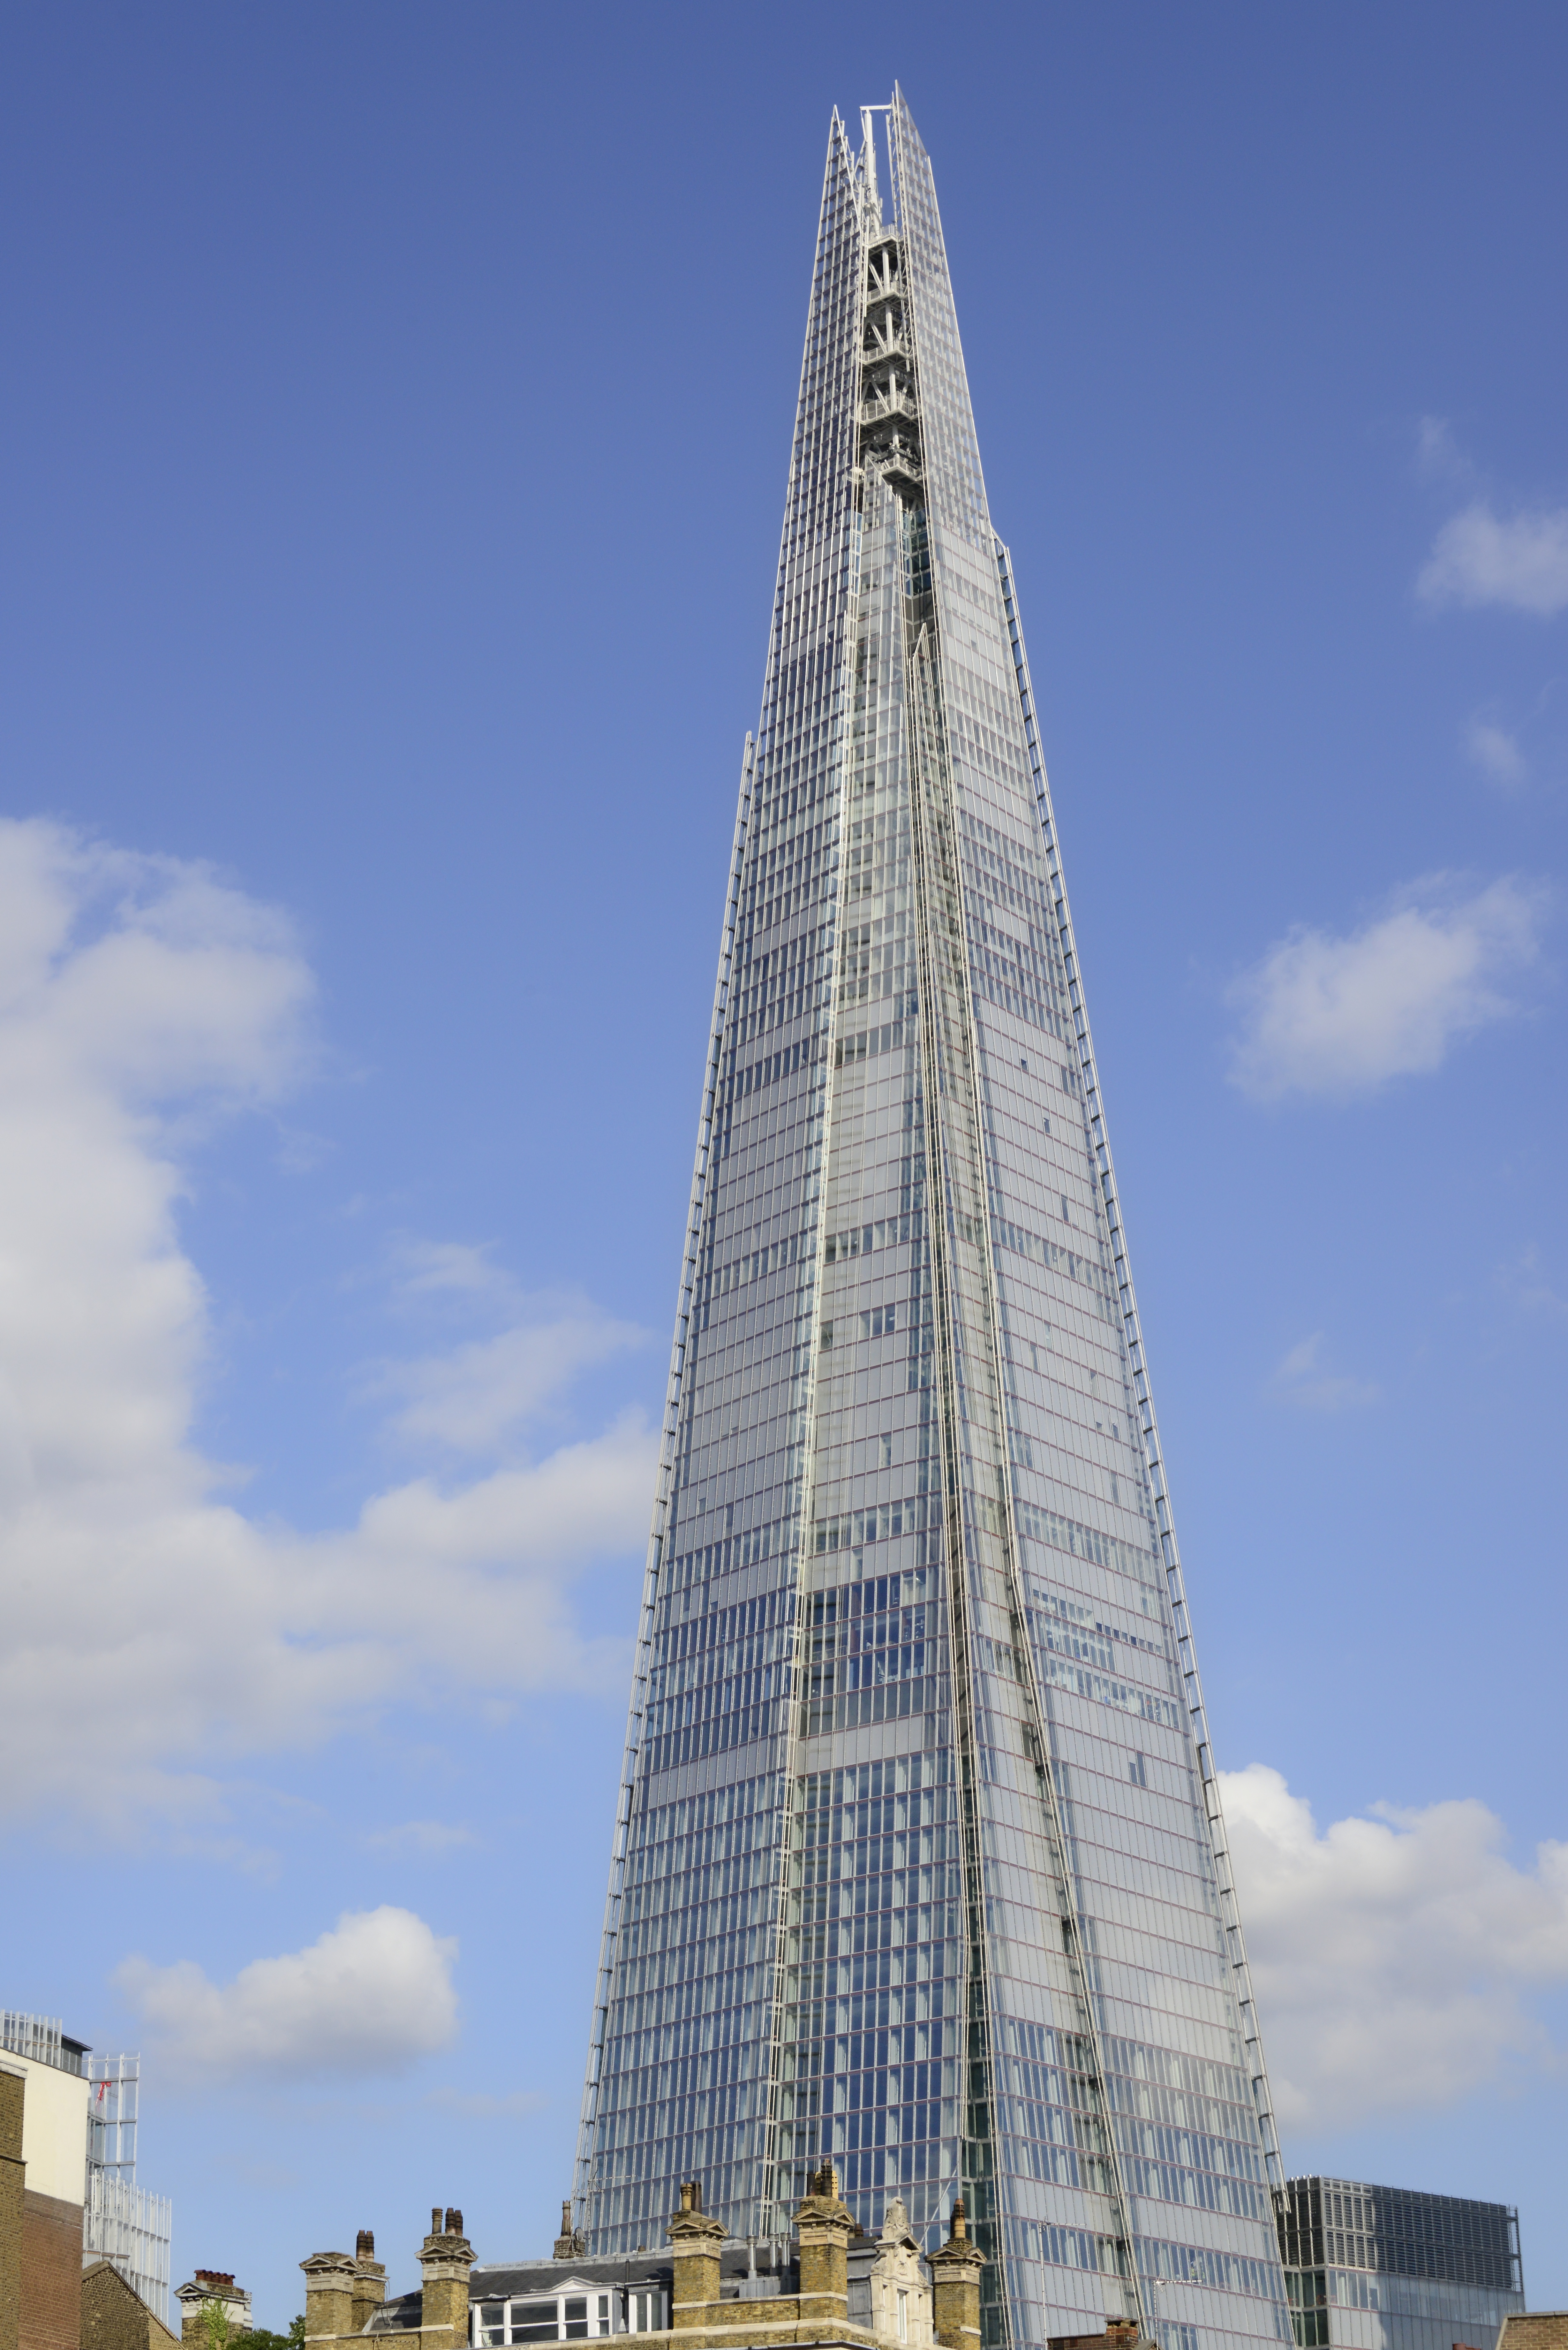 Prestigious global skyscraper award goes to The Shard